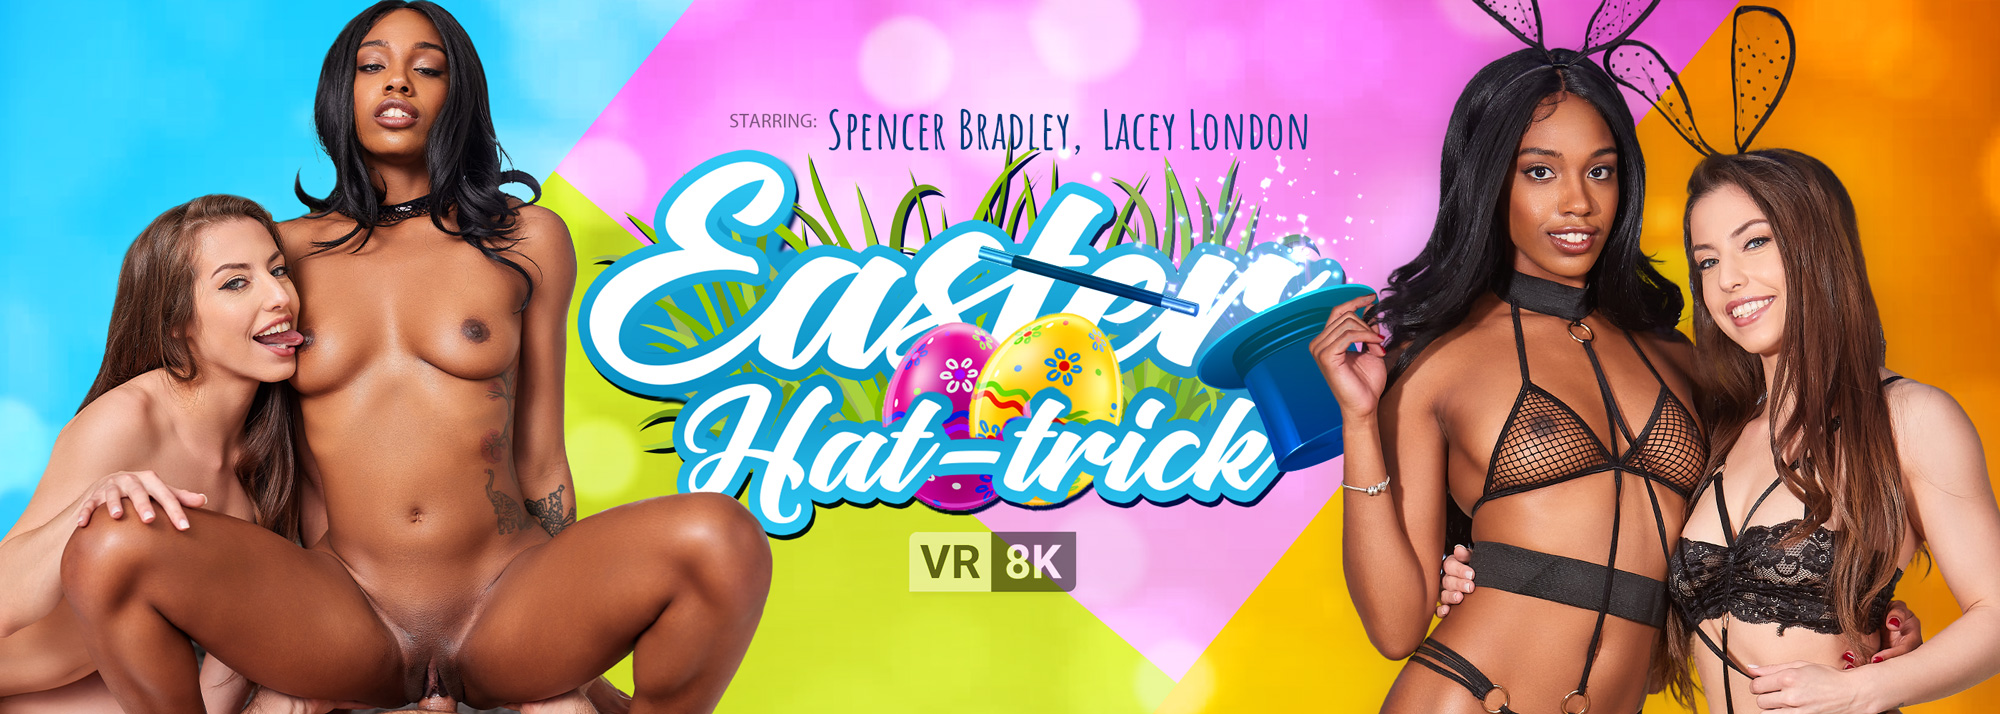 Easter Hat-trick - VR Porn Video, Starring: Spencer Bradley, Lacey London